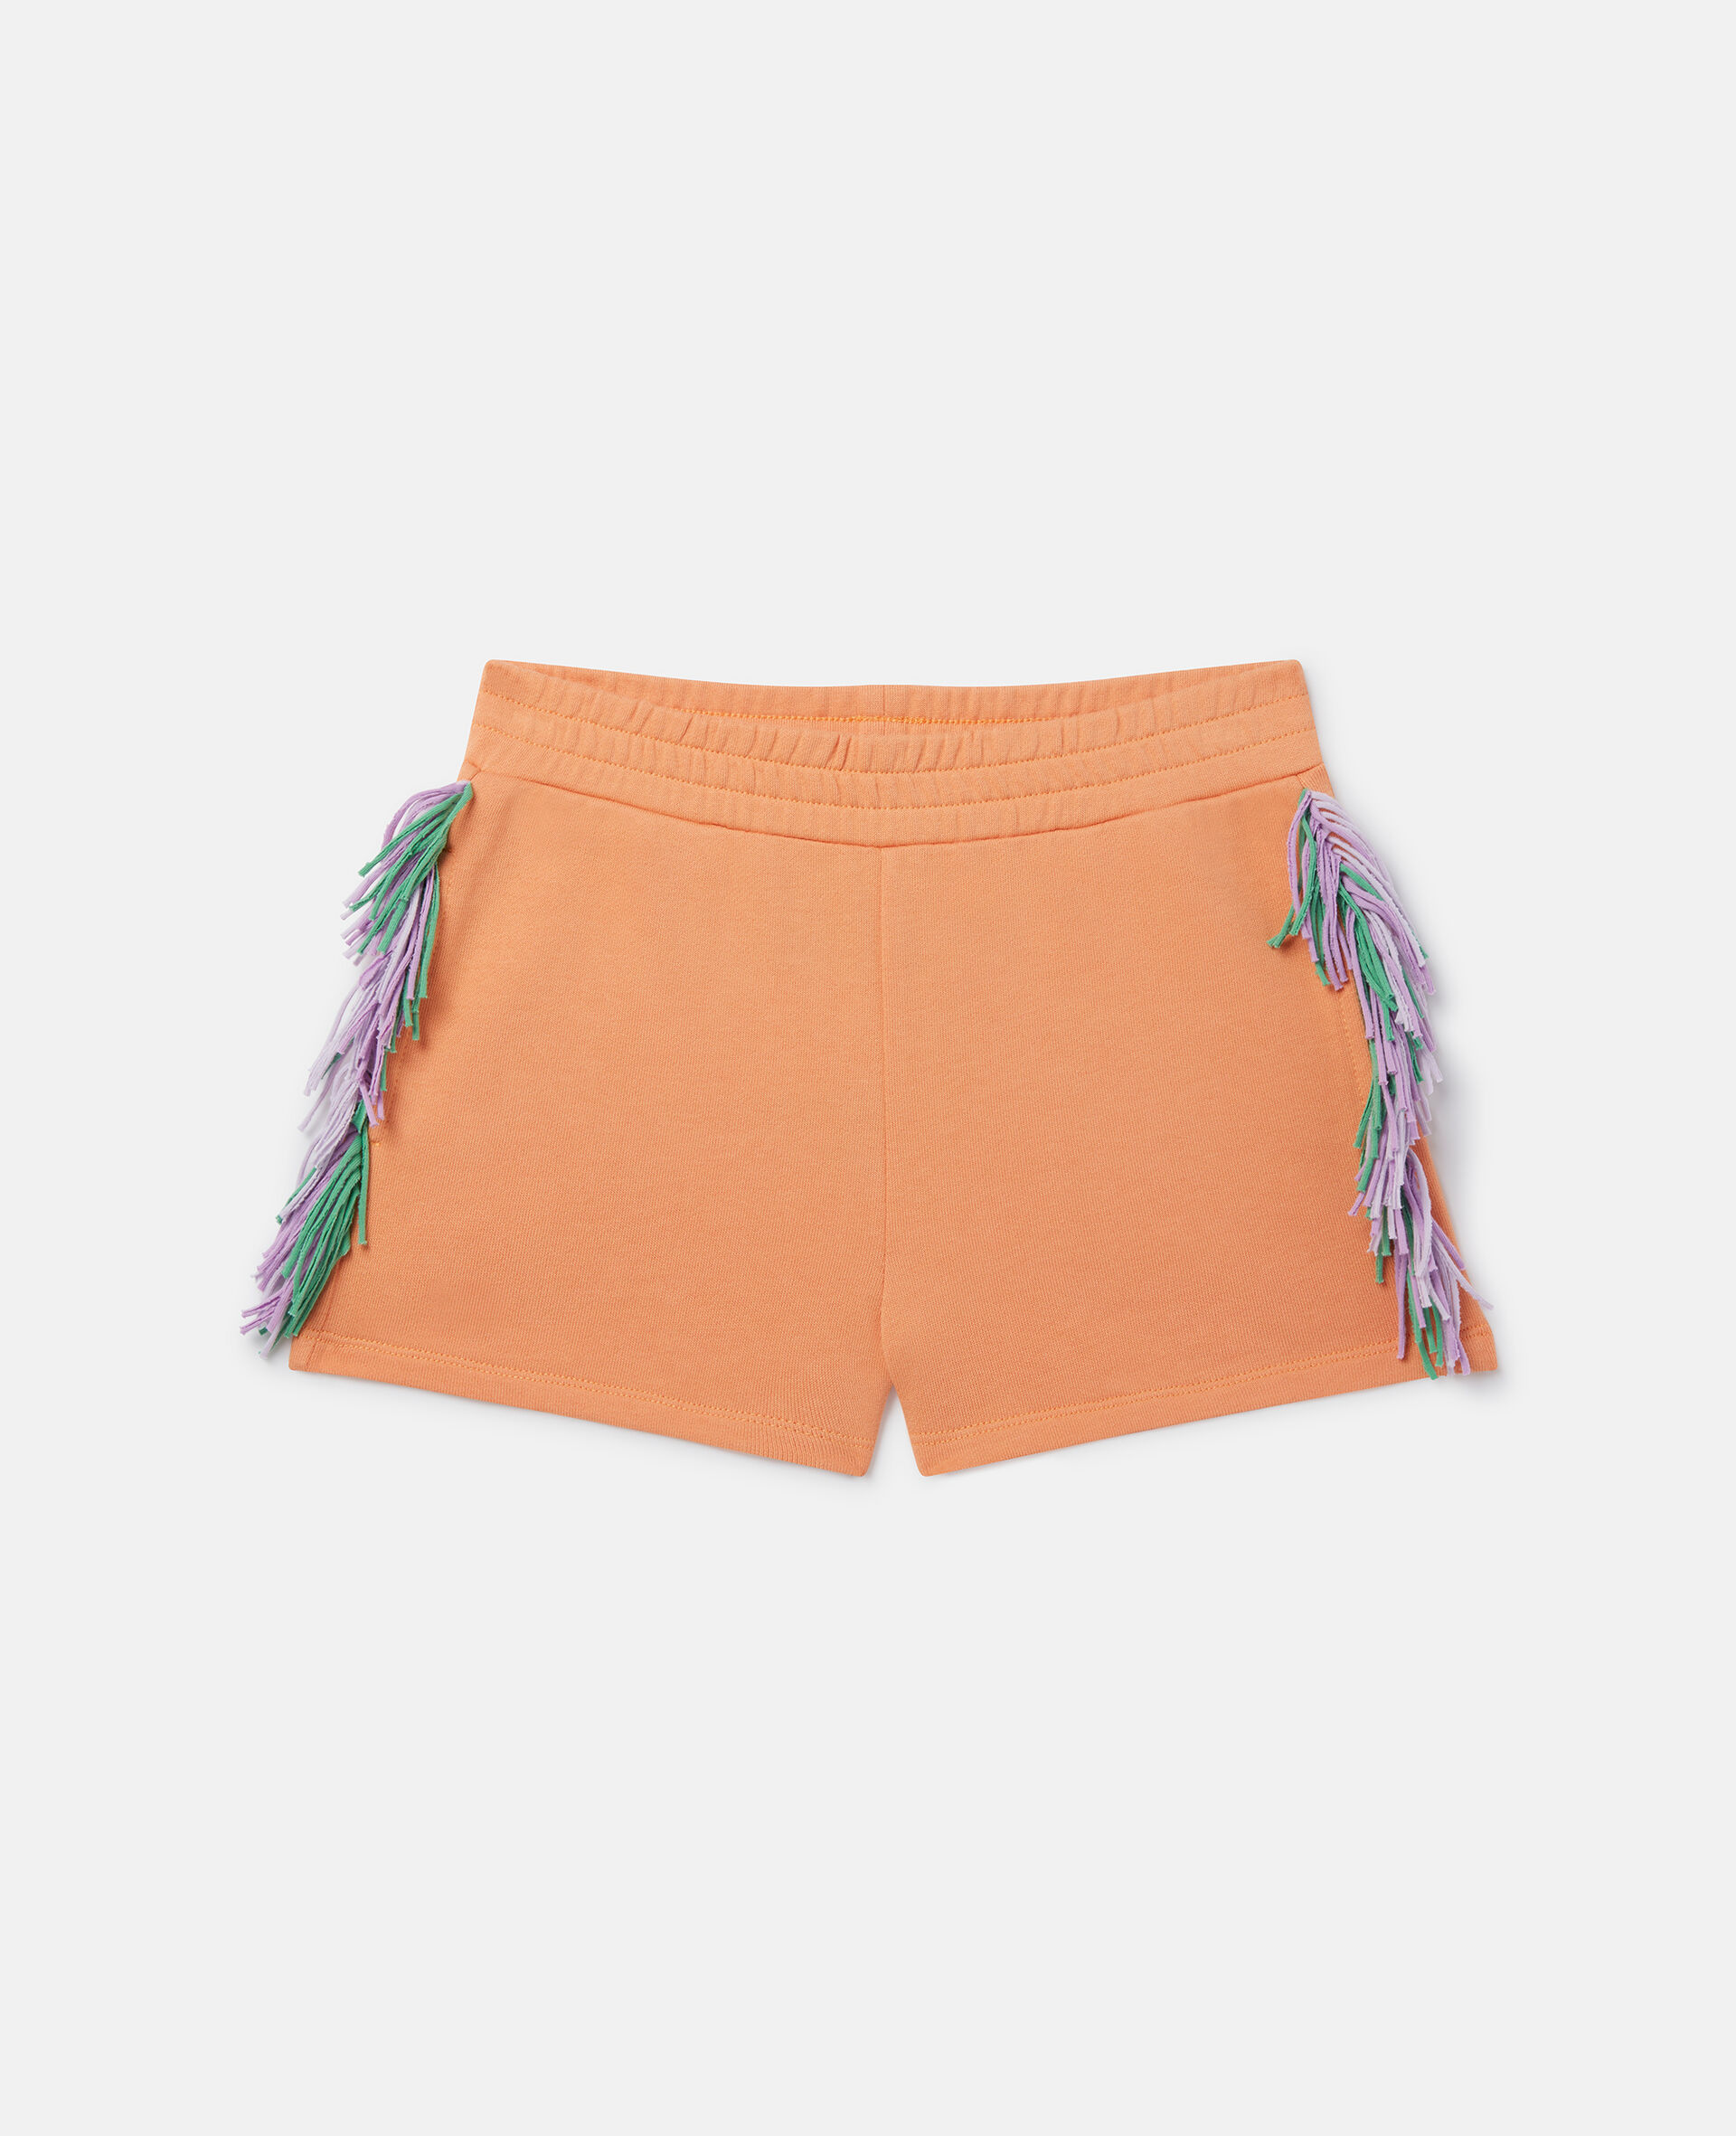 Pantaloncini con frange-Arancione-medium